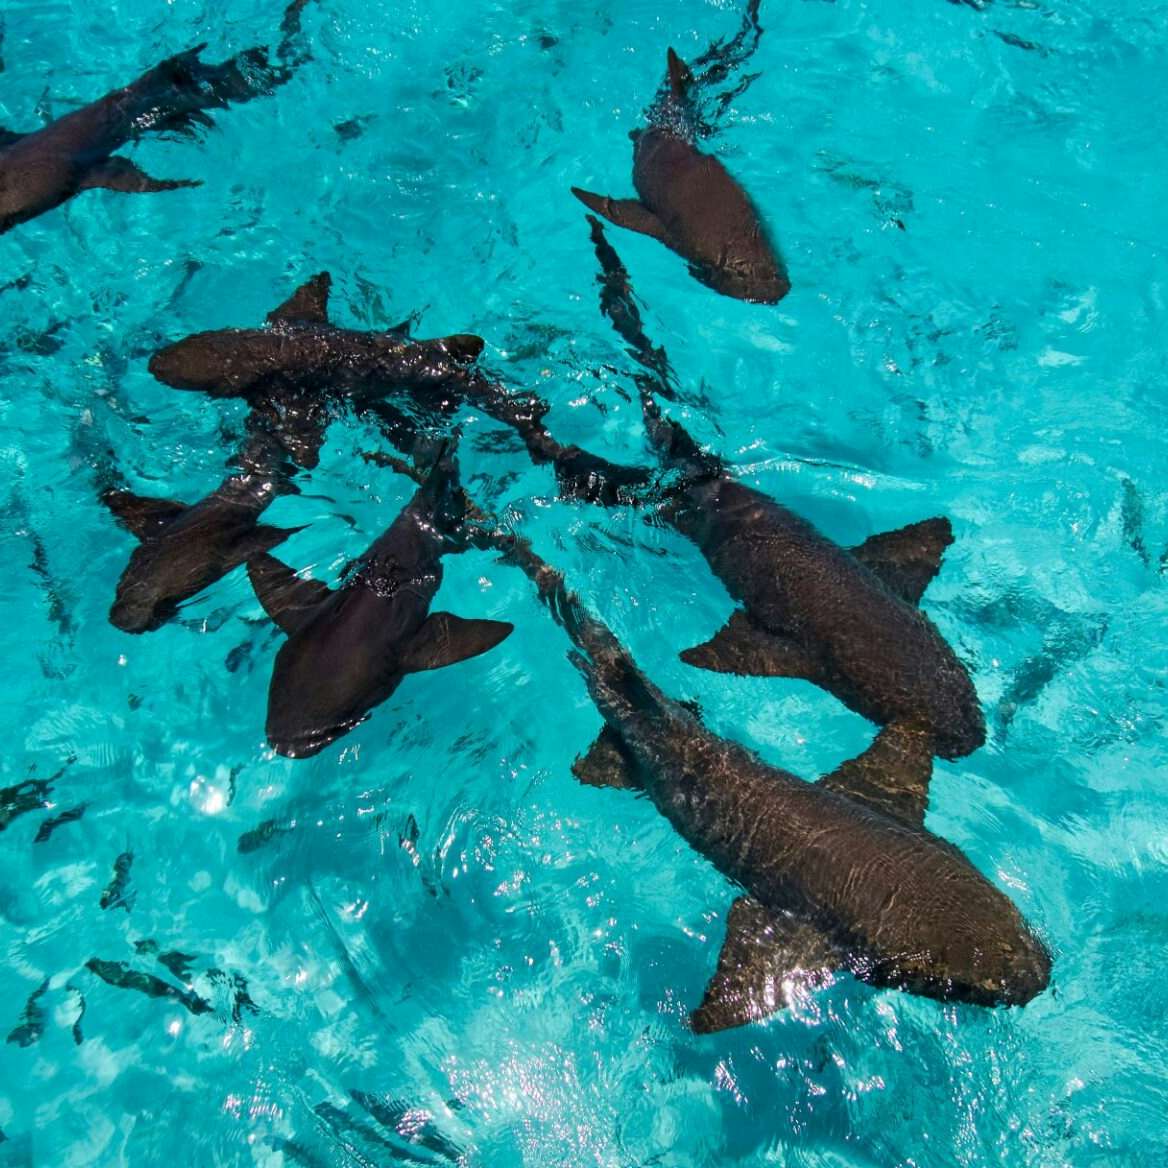 Nurse sharks swimming near the surface at Compass Cay, Bahamas